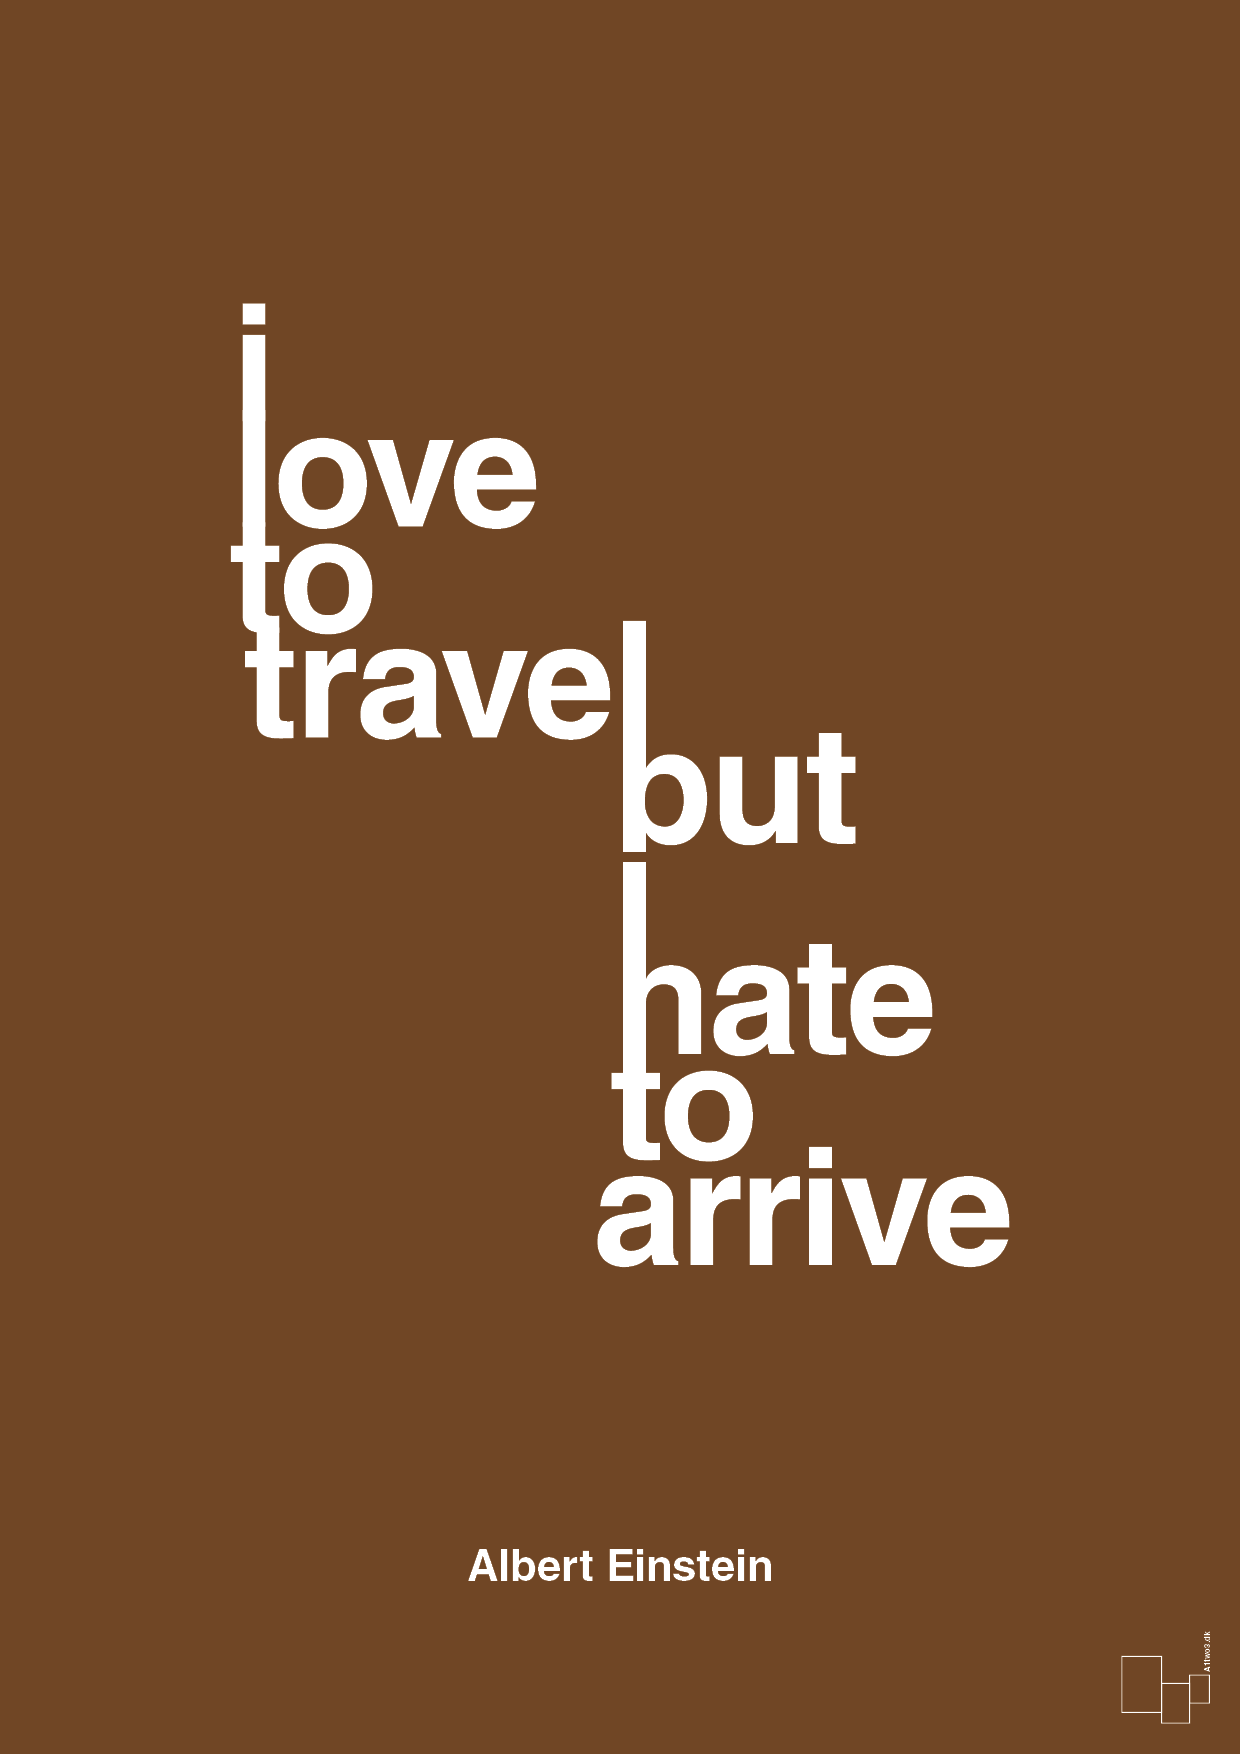 i love to travel but hate to arrive - Plakat med Citater i Dark Brown